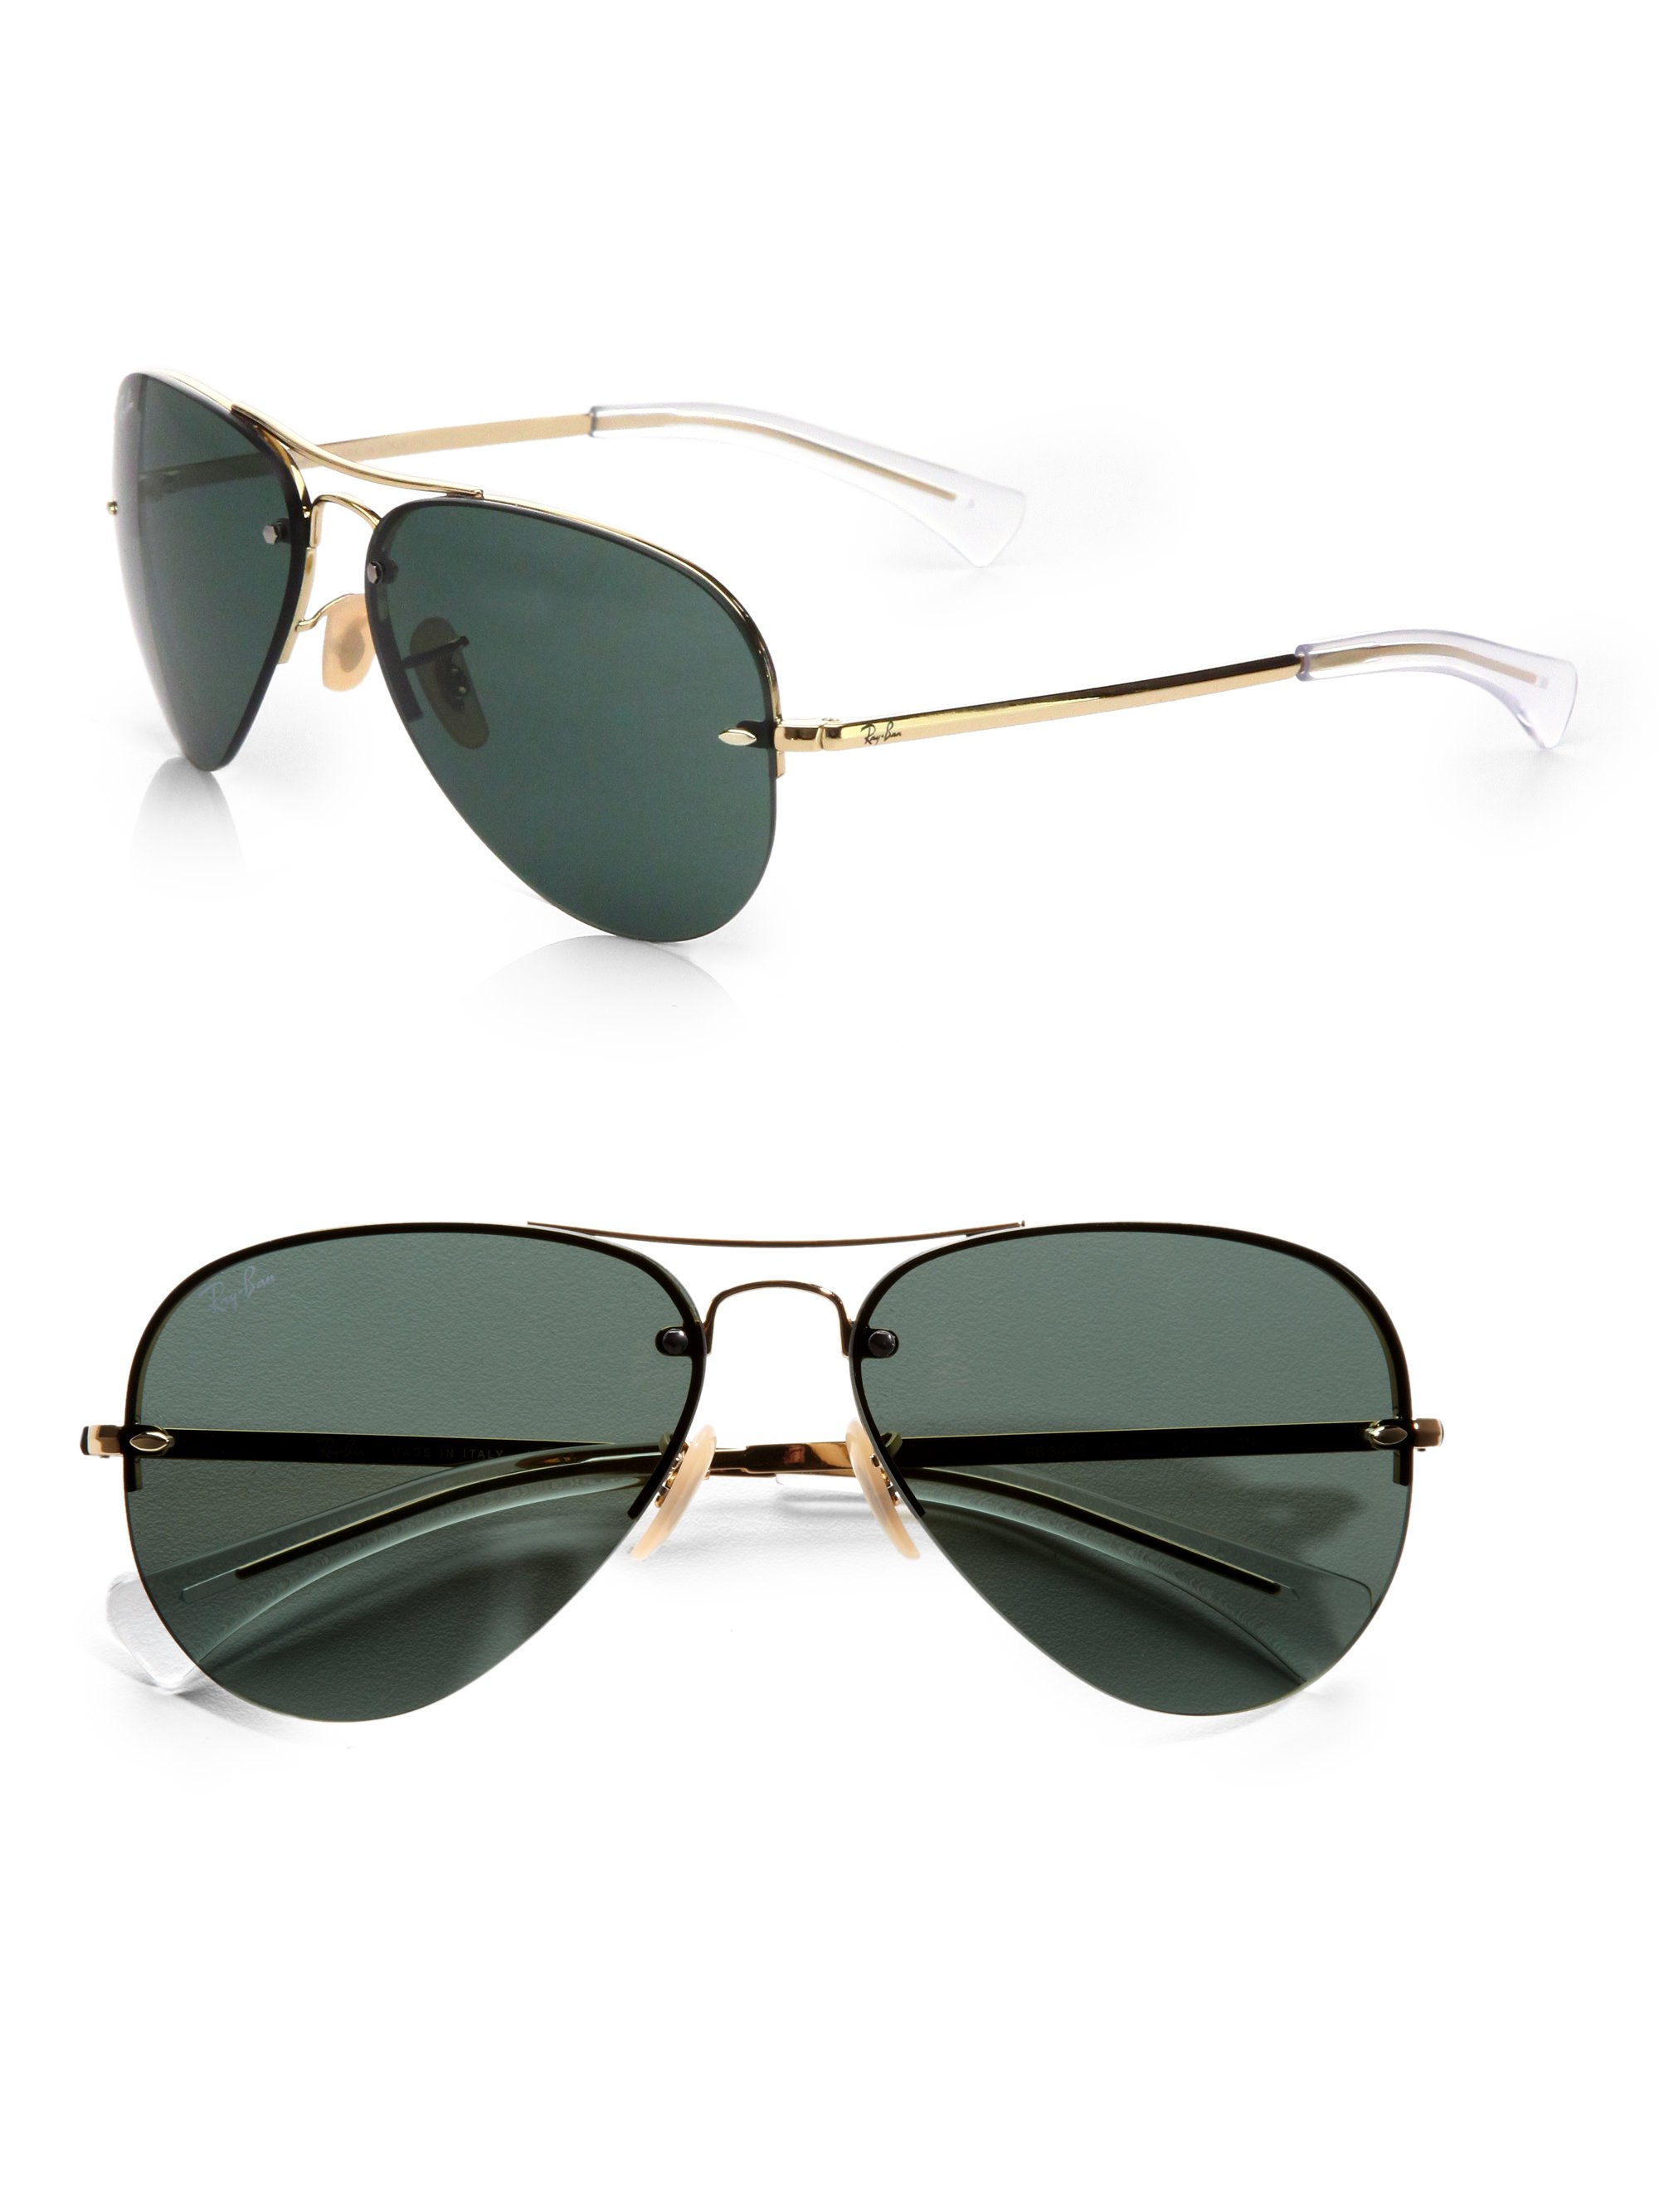 Lyst RayBan Original Polarized Aviator Sunglasses in Green